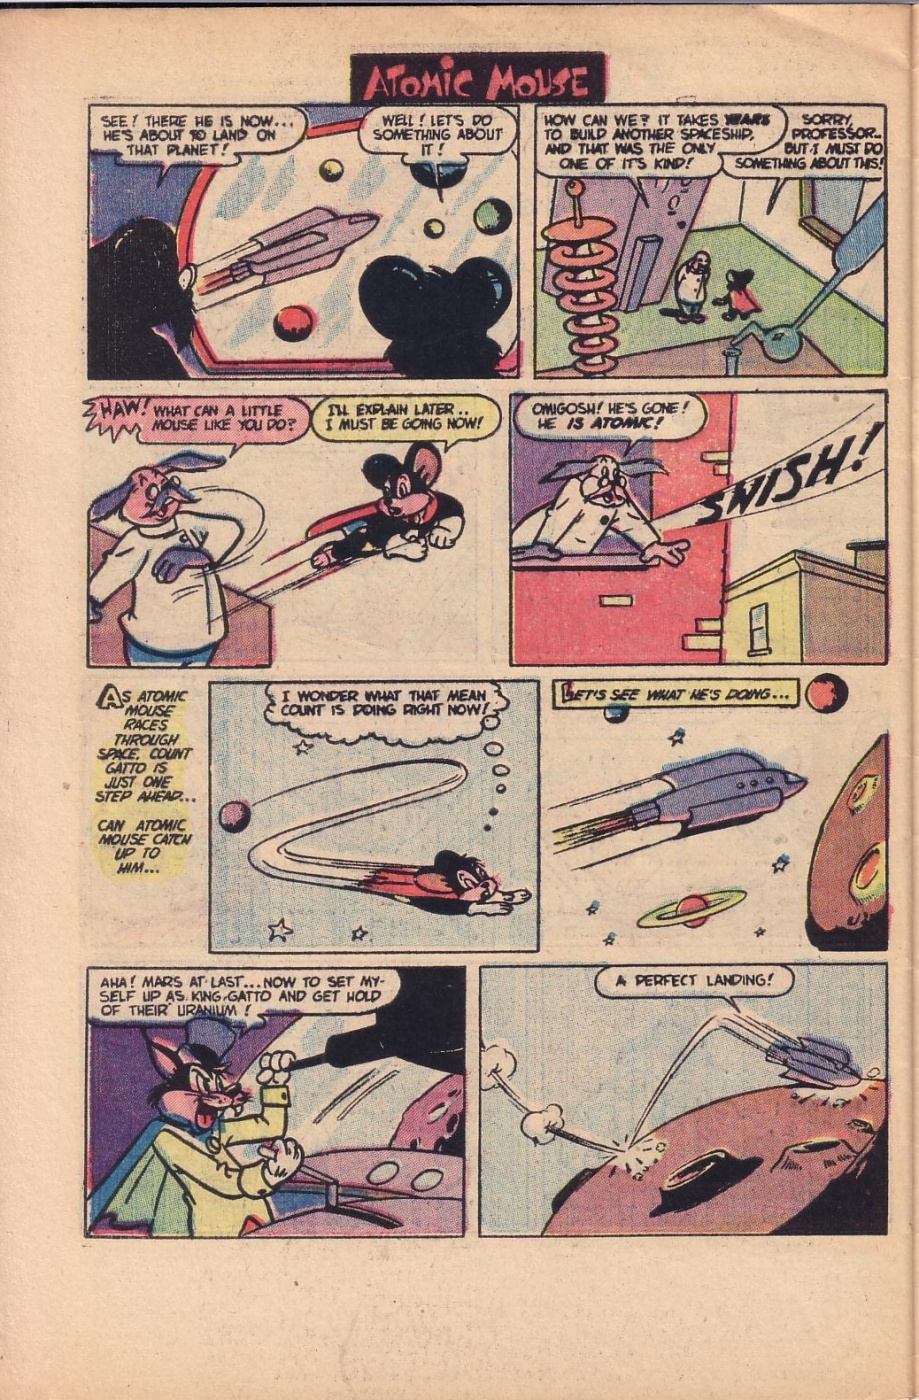 Atomic Mouse Comics - Funny Comics (28)